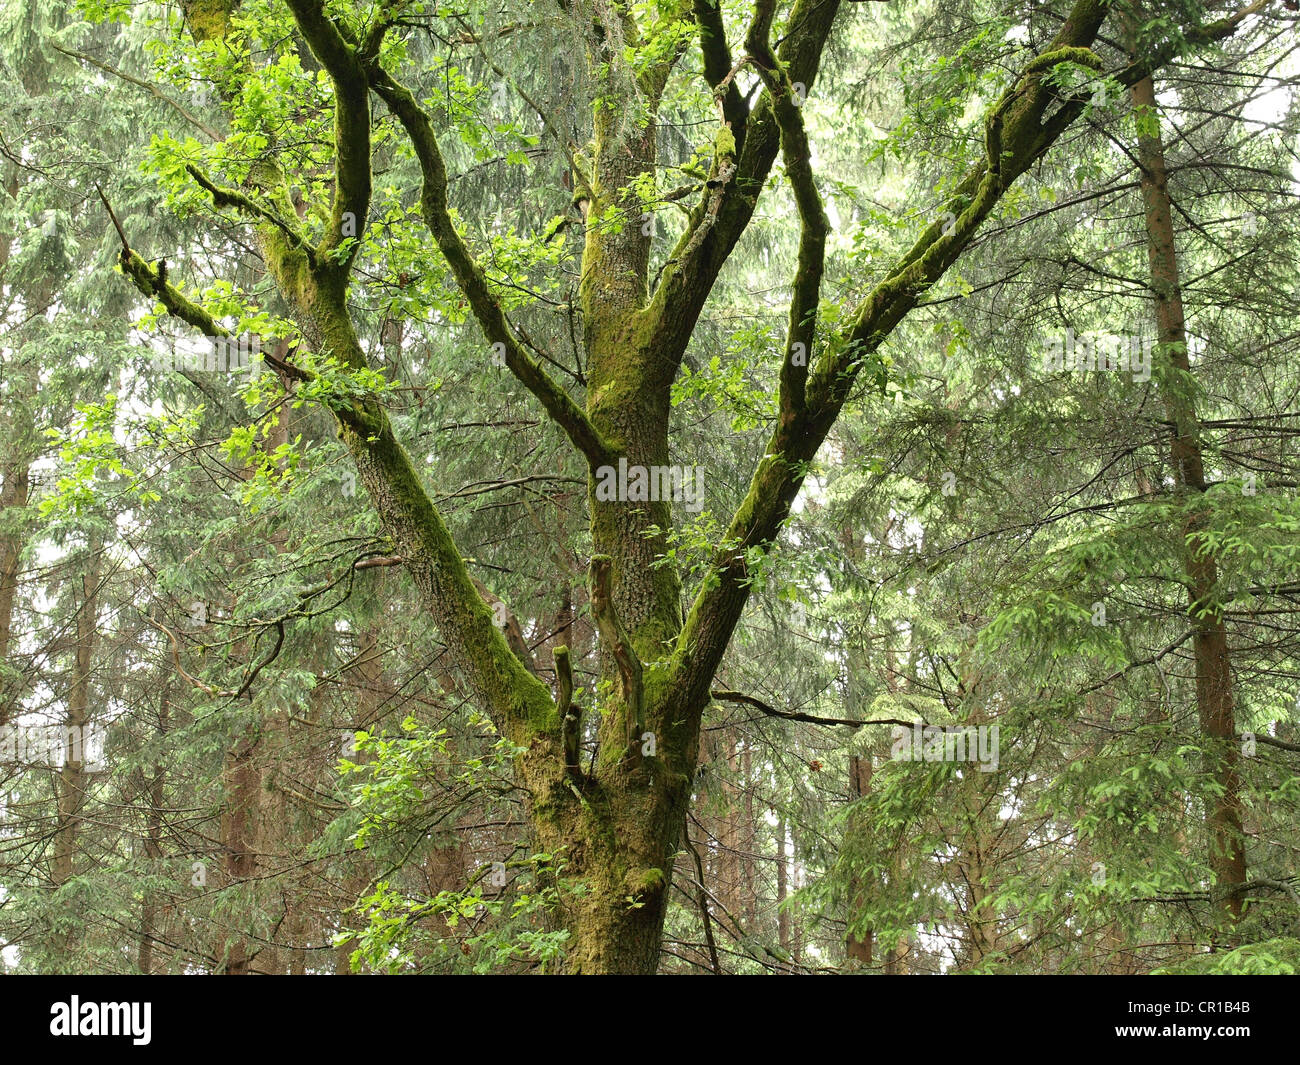 oak tree with mossy log / Eichenbaum mit bemoostem Stamm Stock Photo